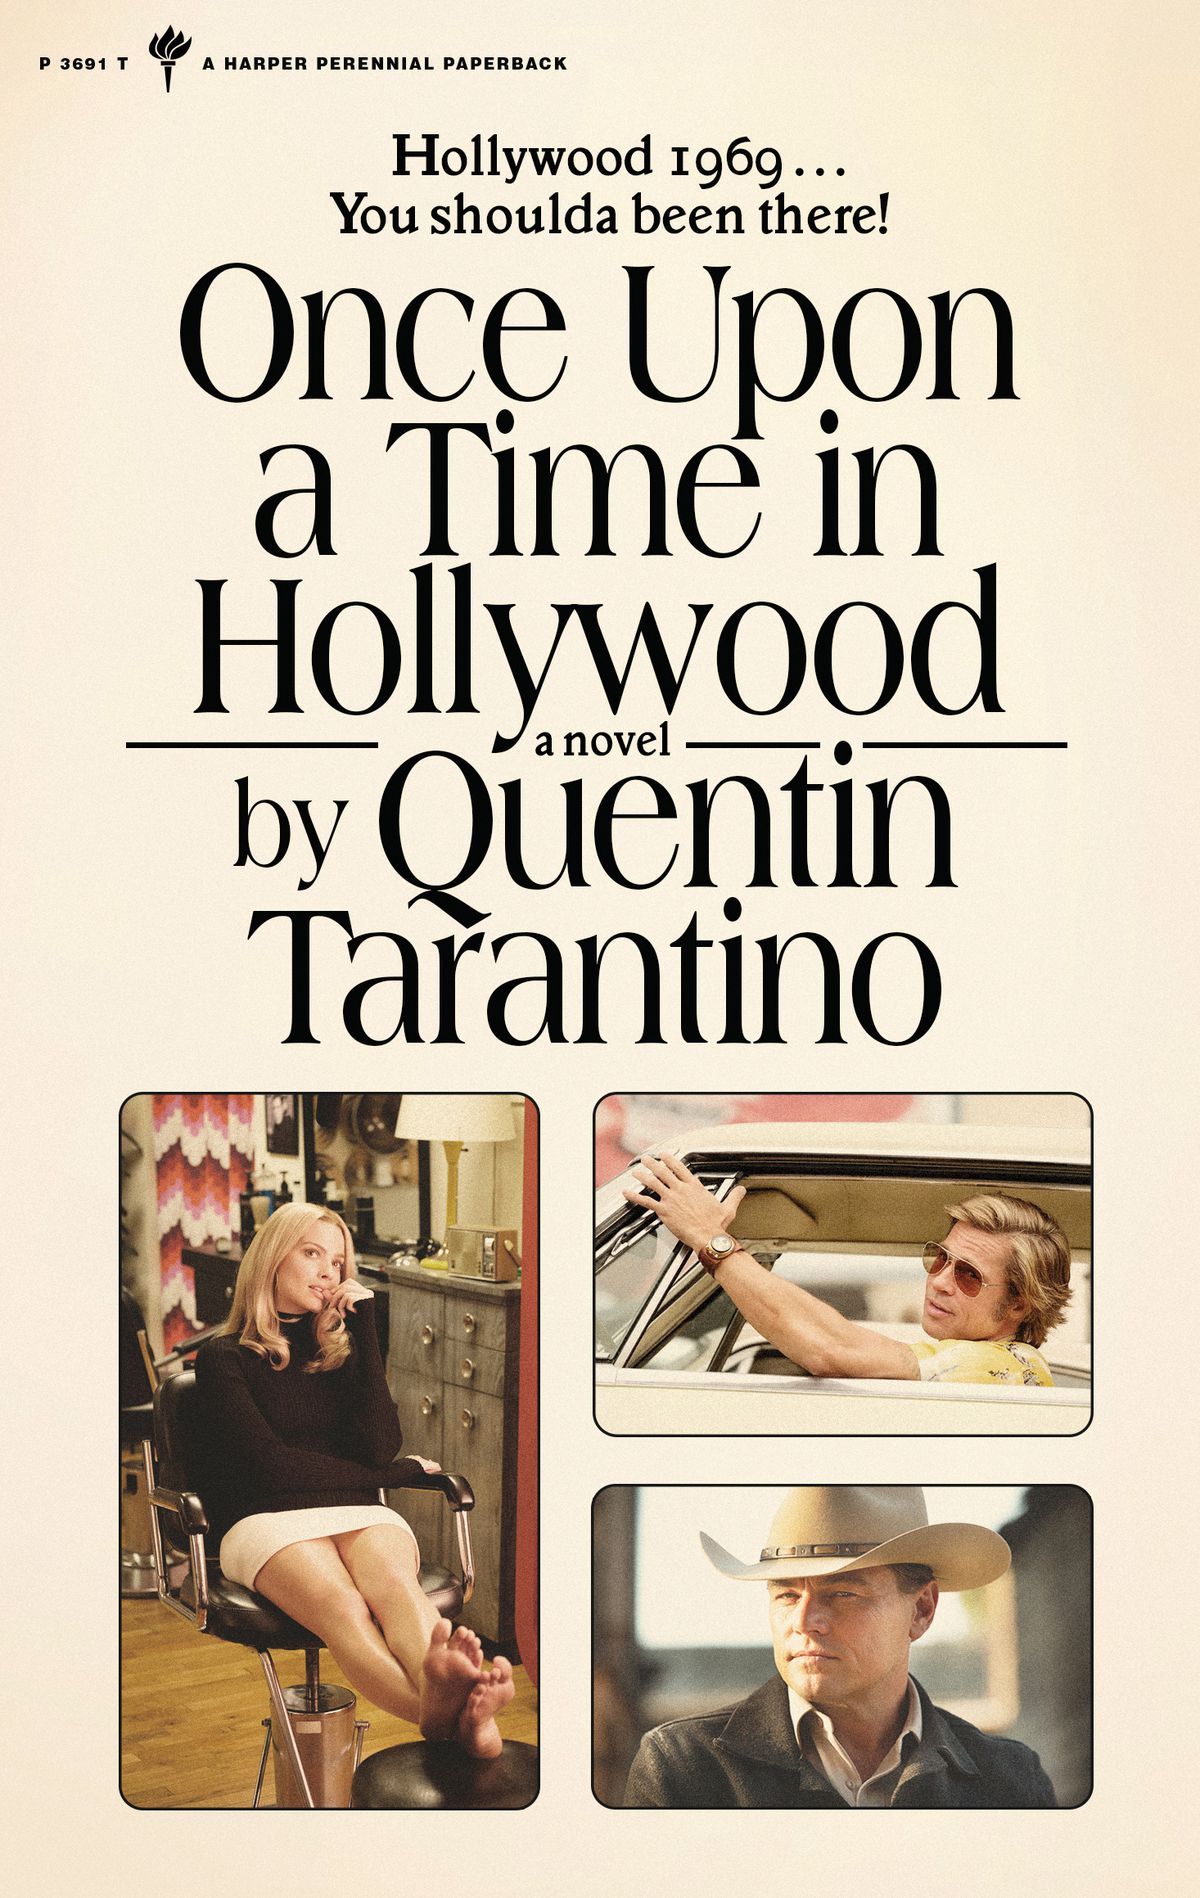 La copertina del romanzo di Quentin Tarantino del suo film del 2019 C'era una volta a Hollywood